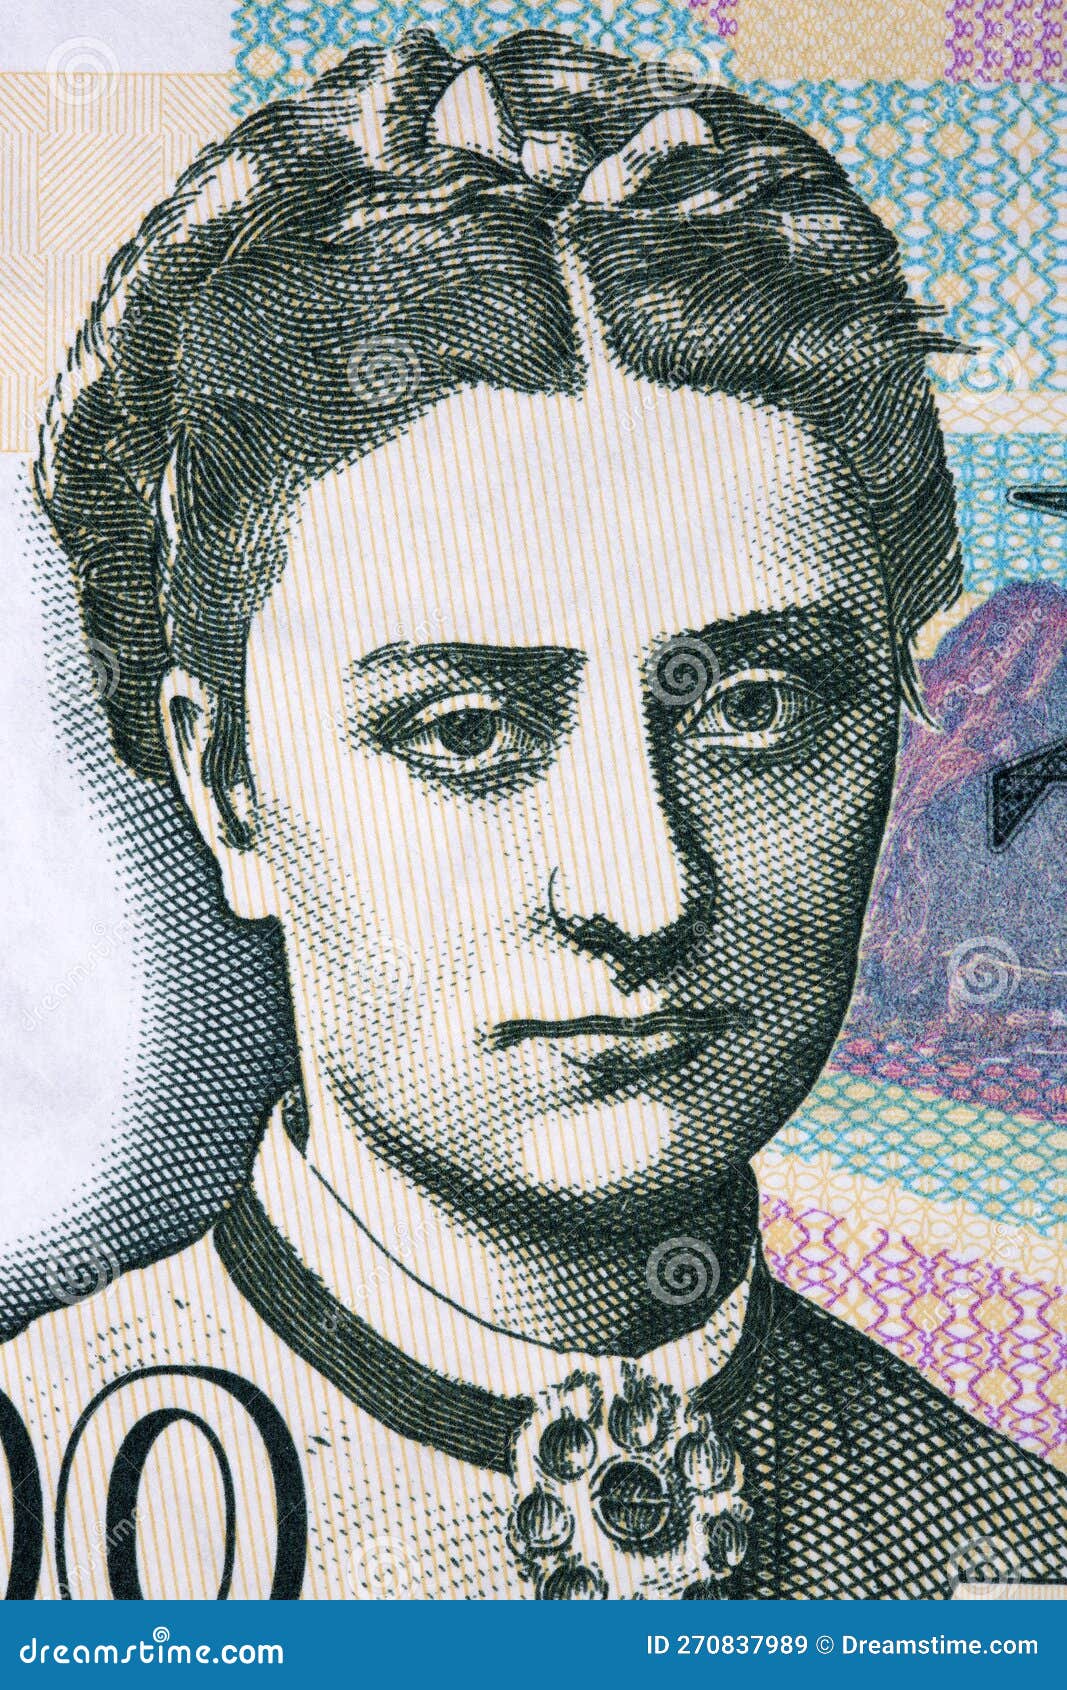 gina krog a portrait from money